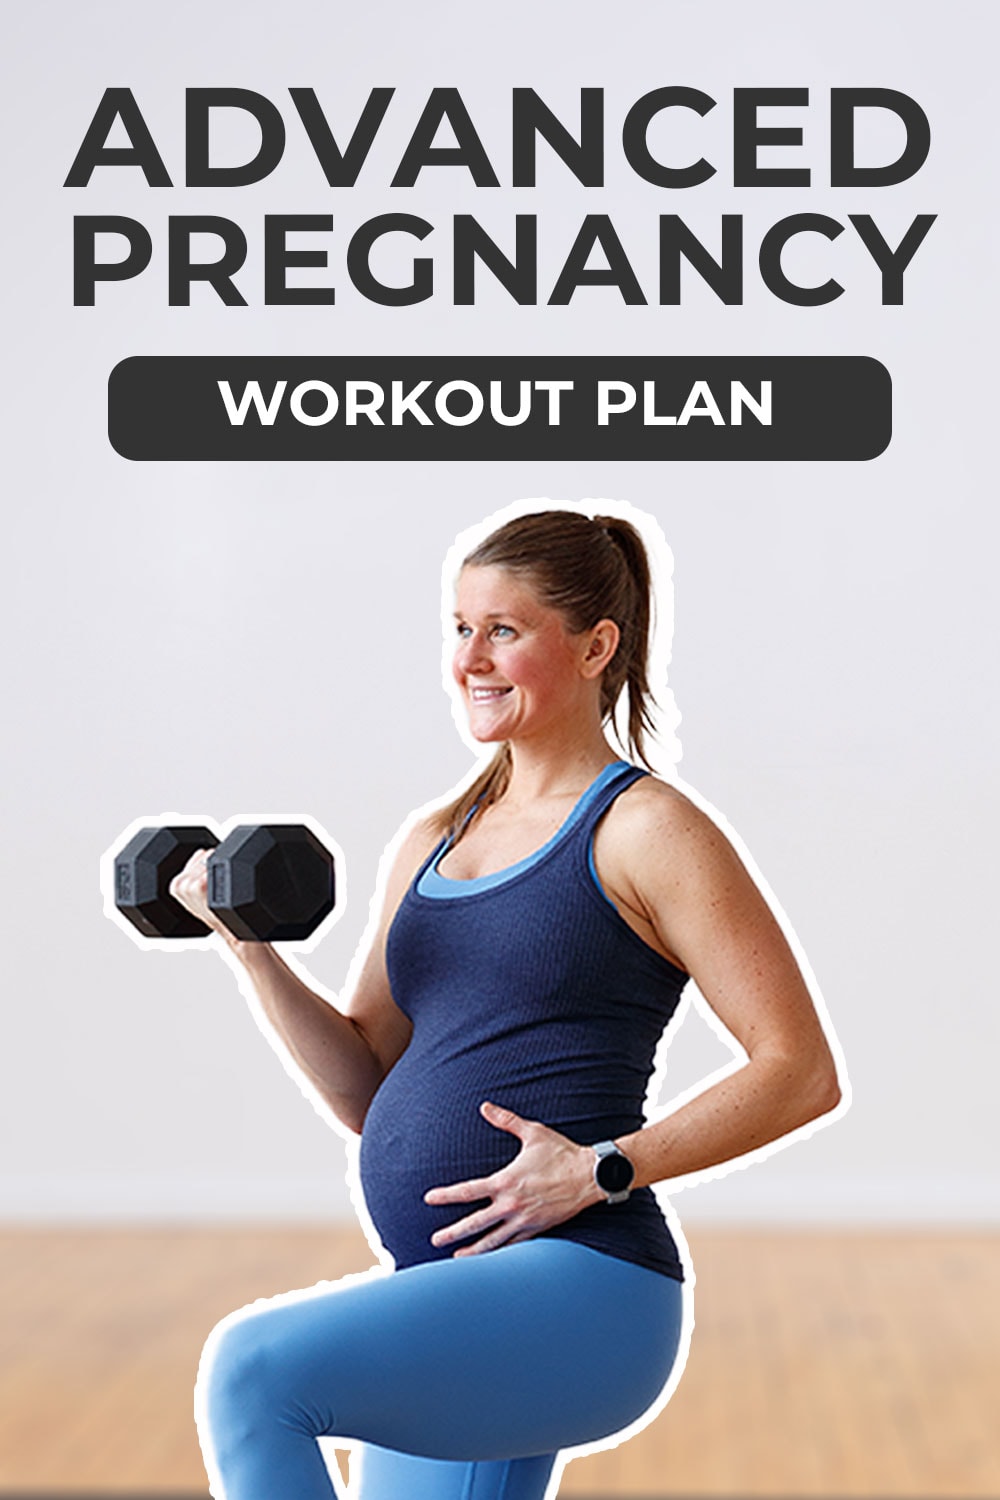 Free Pregnancy Workout Plan (by Trimester) Nourish Move Love